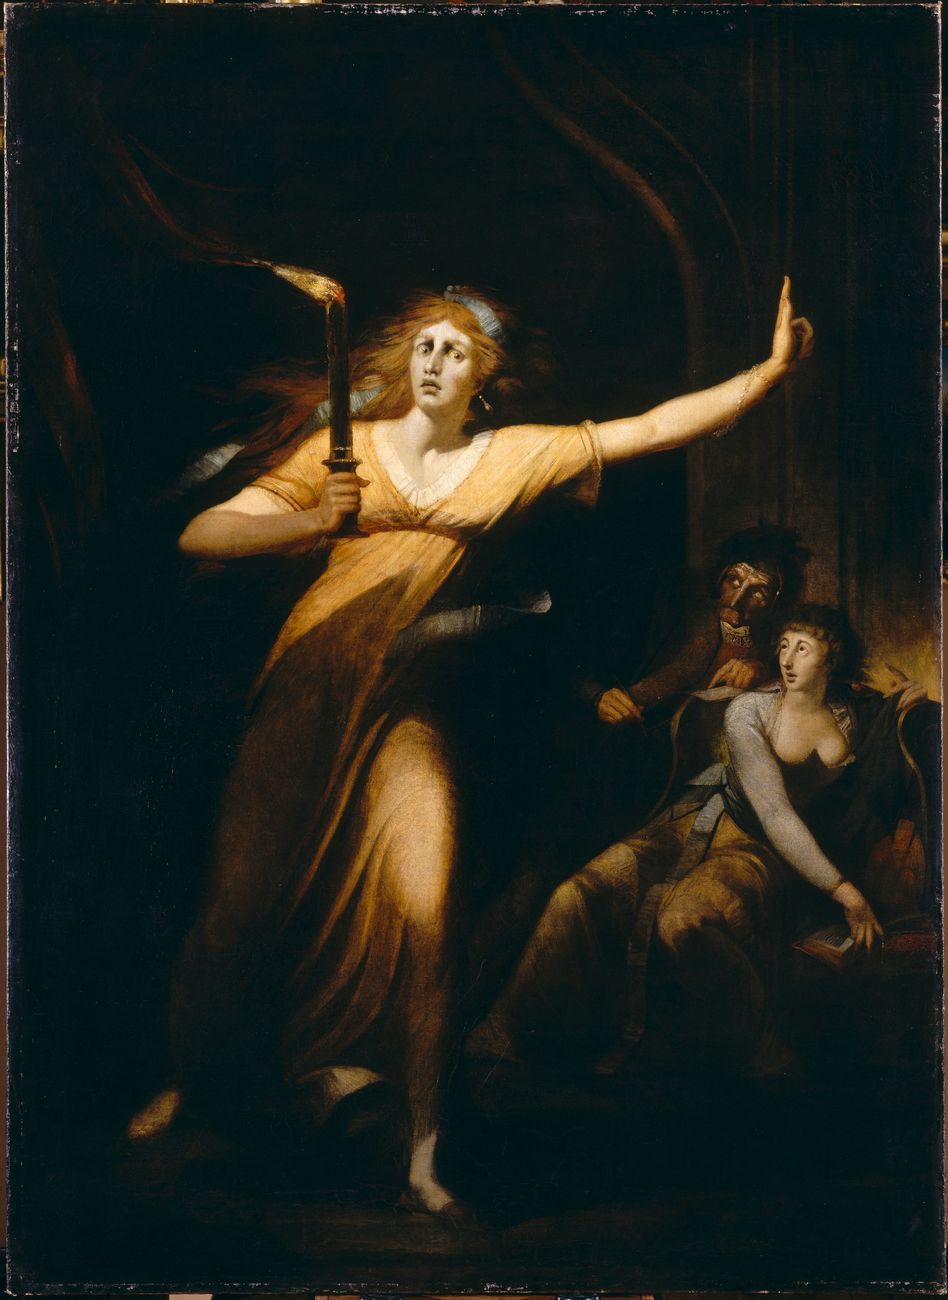 Johann Heinrich Füssli, Lady Macbeth, schlafwandelnd, 1783 ca. Louvre, Paris. Photo © RMN-Grand Palais - Hervé Lewandowski. Courtesy Kunstmuseum, Basilea